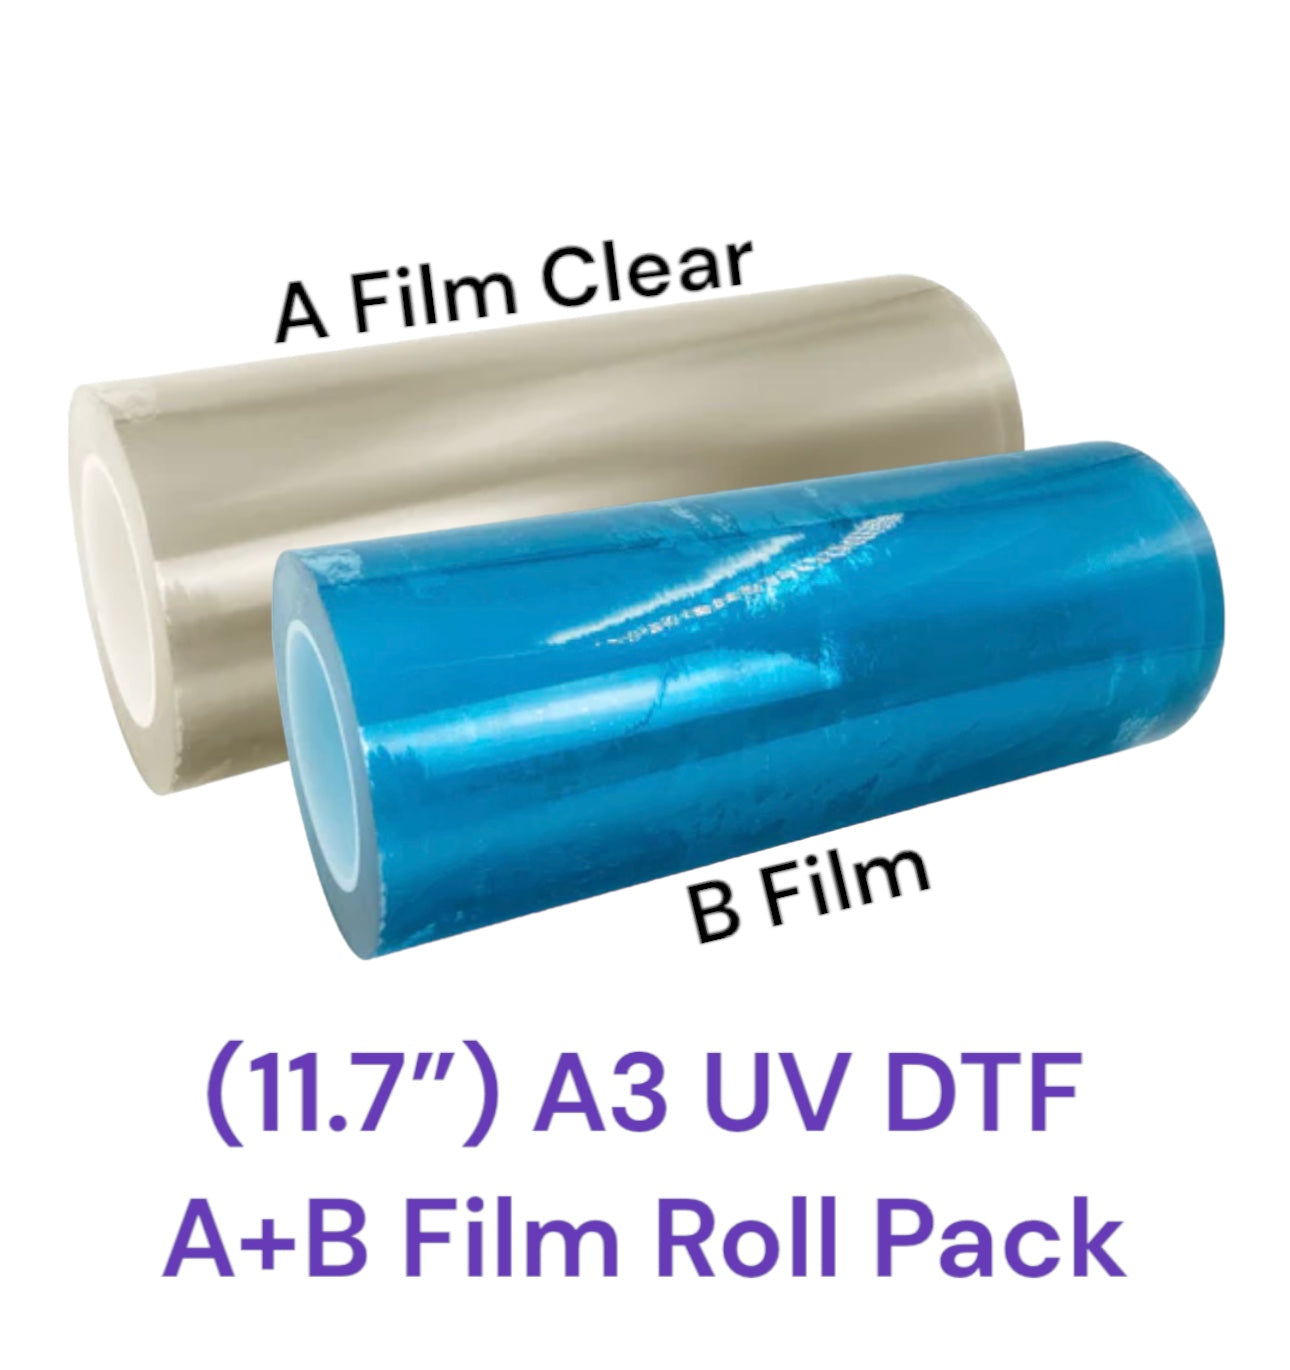 UV DTF Film Roll 11.7" x 328' (A3) - A+B Film Roll (CLEAR PACK)